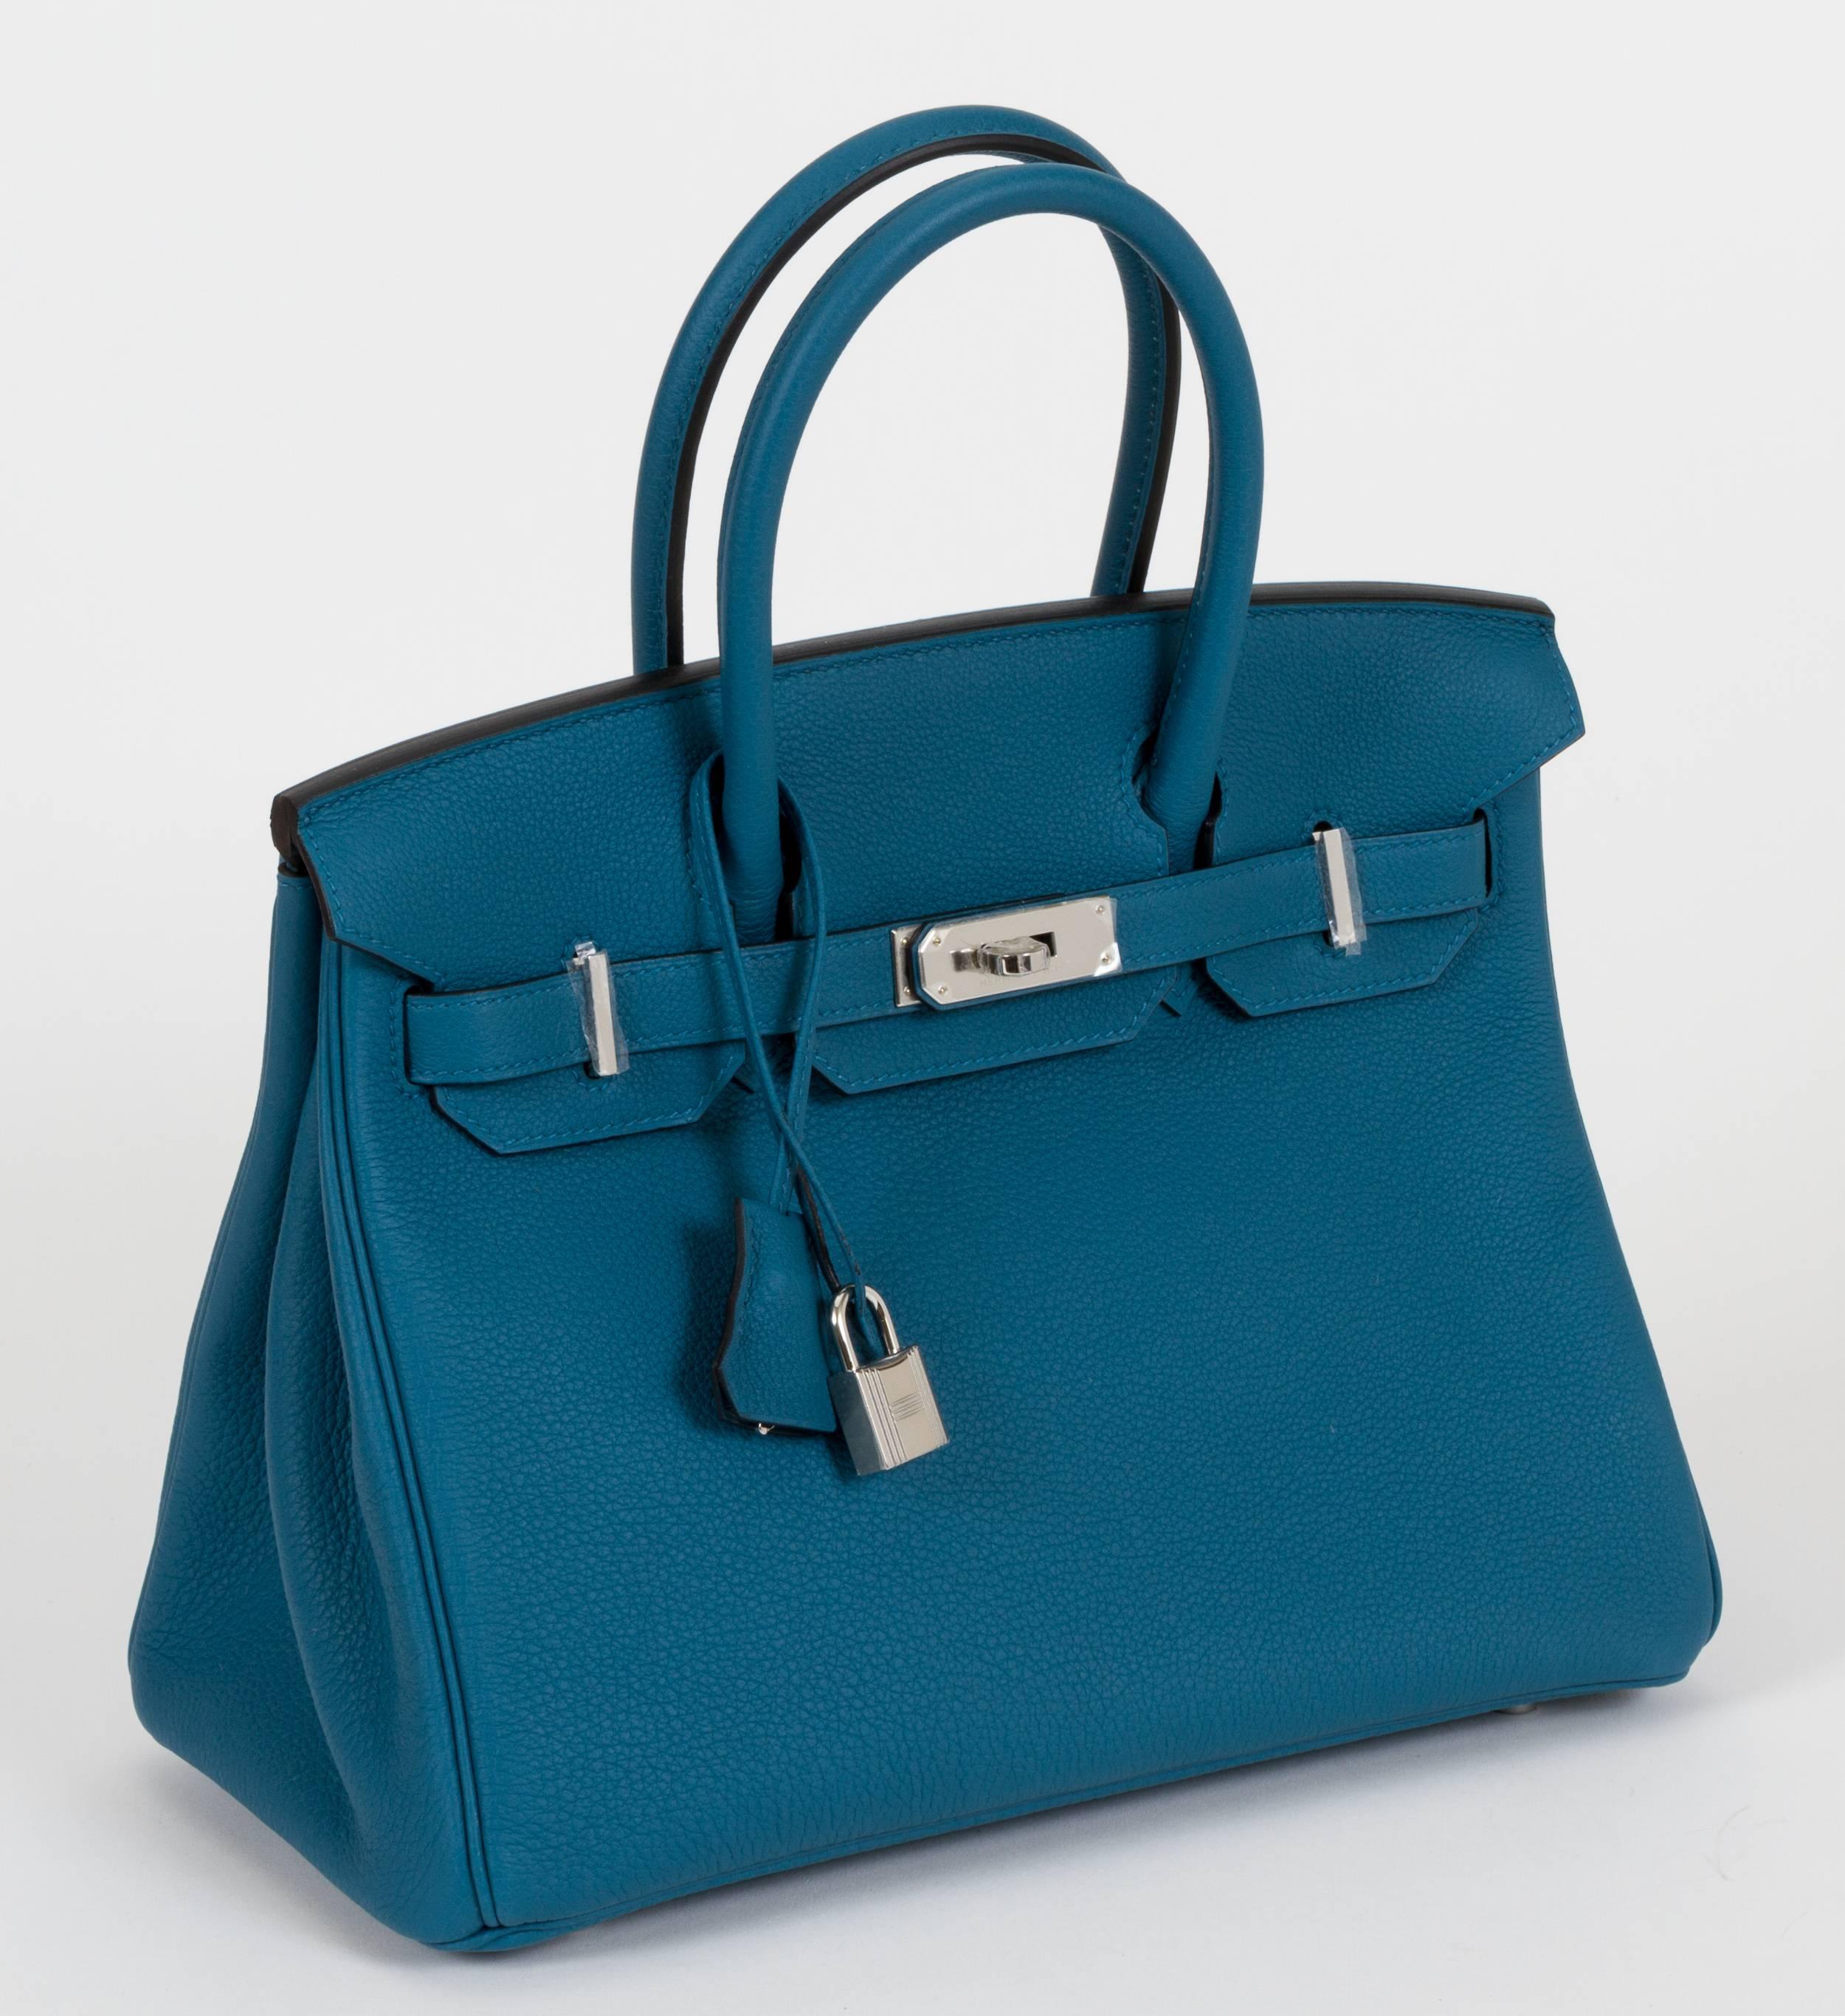 Hermès 30cm birkin bag in blue cobalt togo leather and palladium hardware. Handle drop, 3